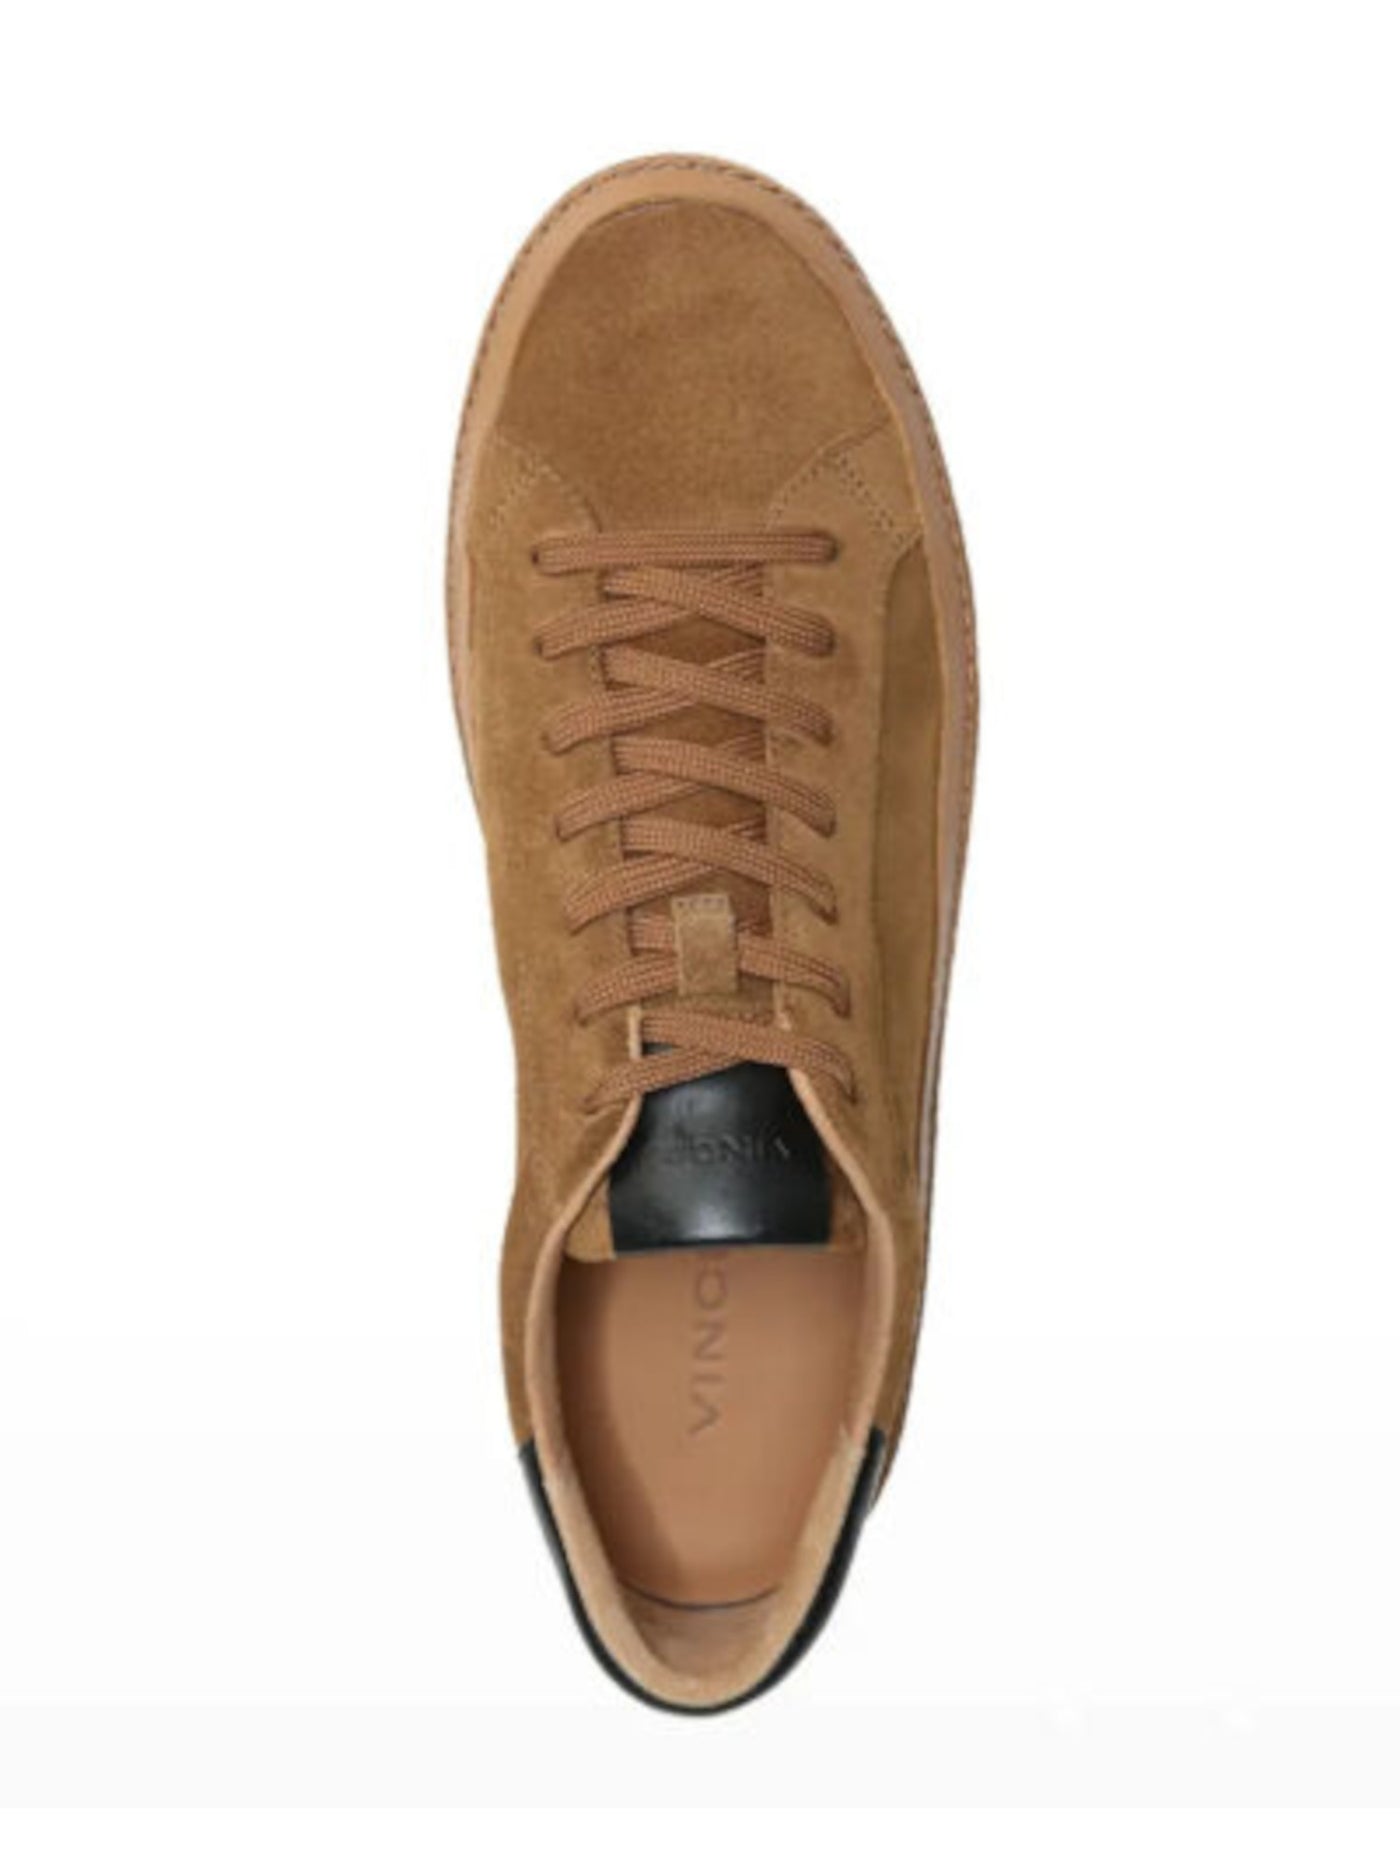 VINCE. Mens Brown Comfort Prescott Round Toe Platform Lace-Up Leather Athletic Sneakers Shoes M